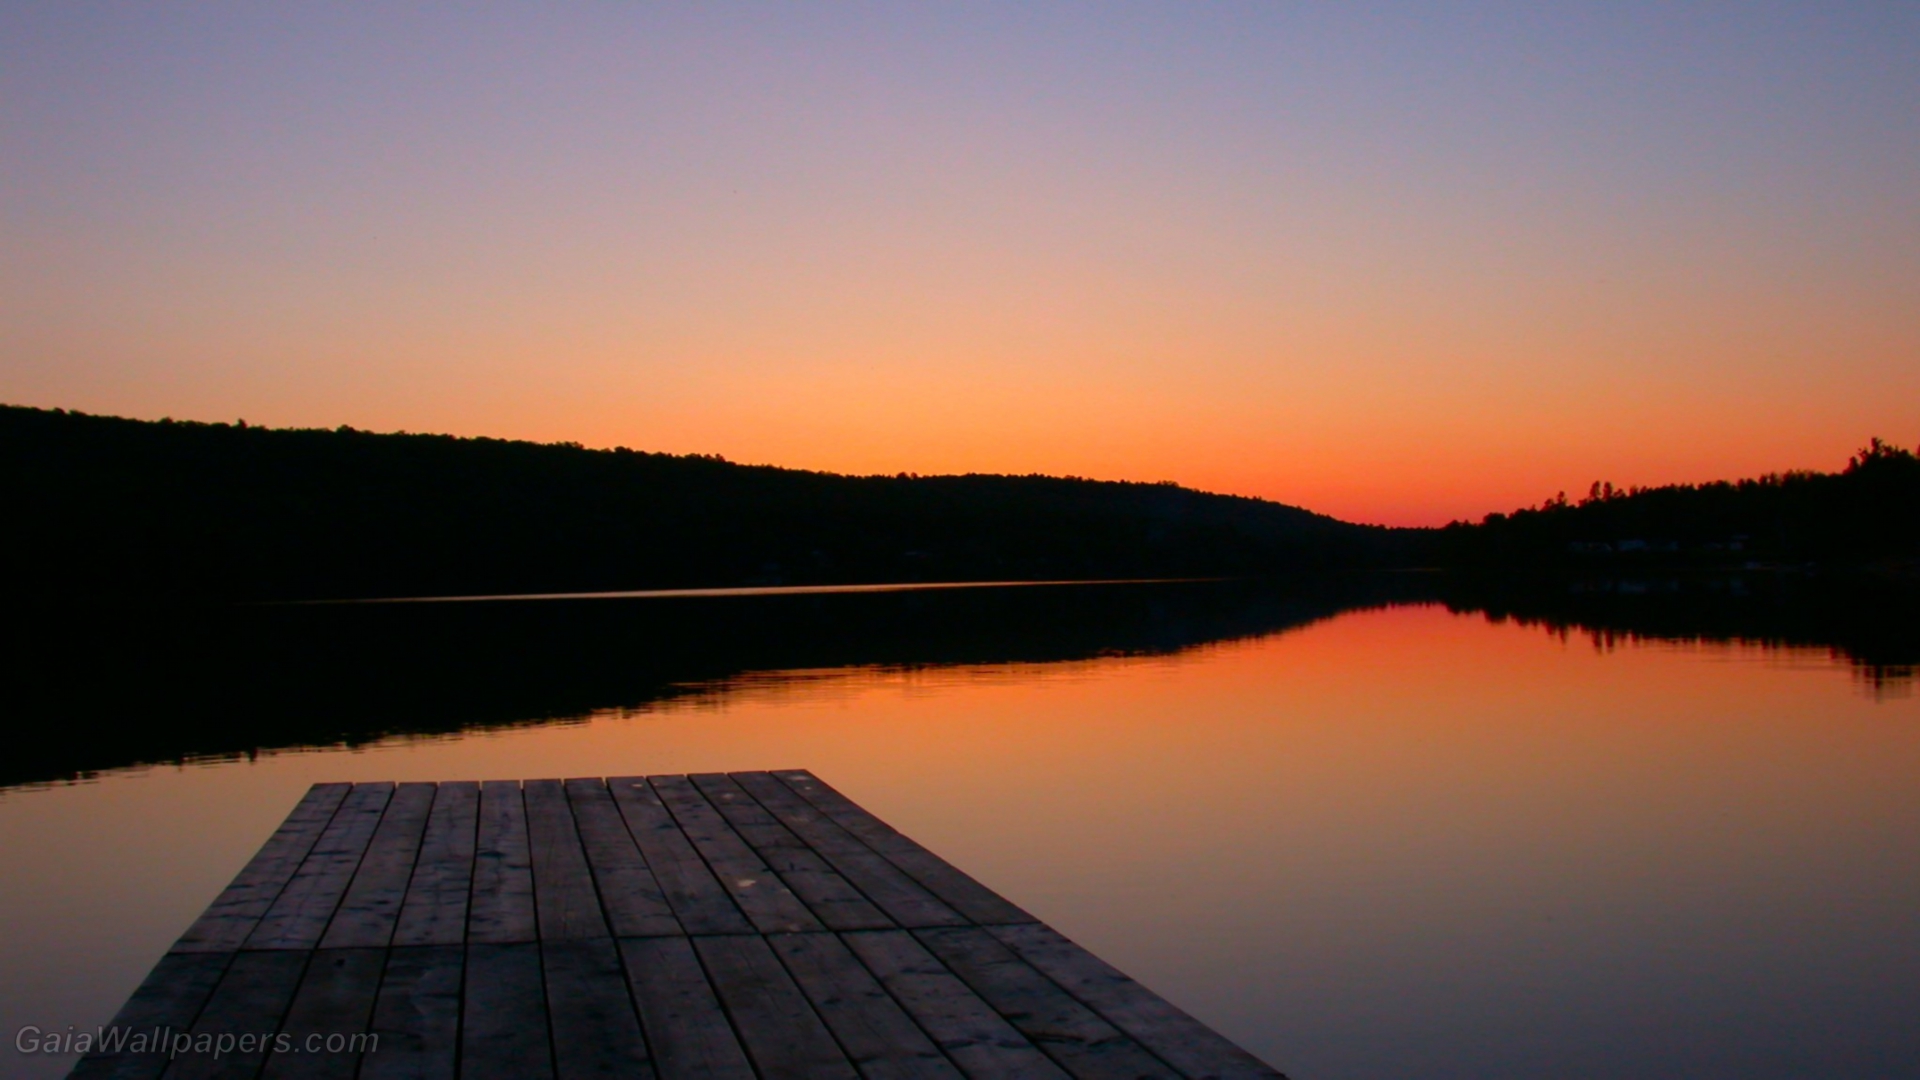 Calm lake after sunset - Free desktop wallpapers